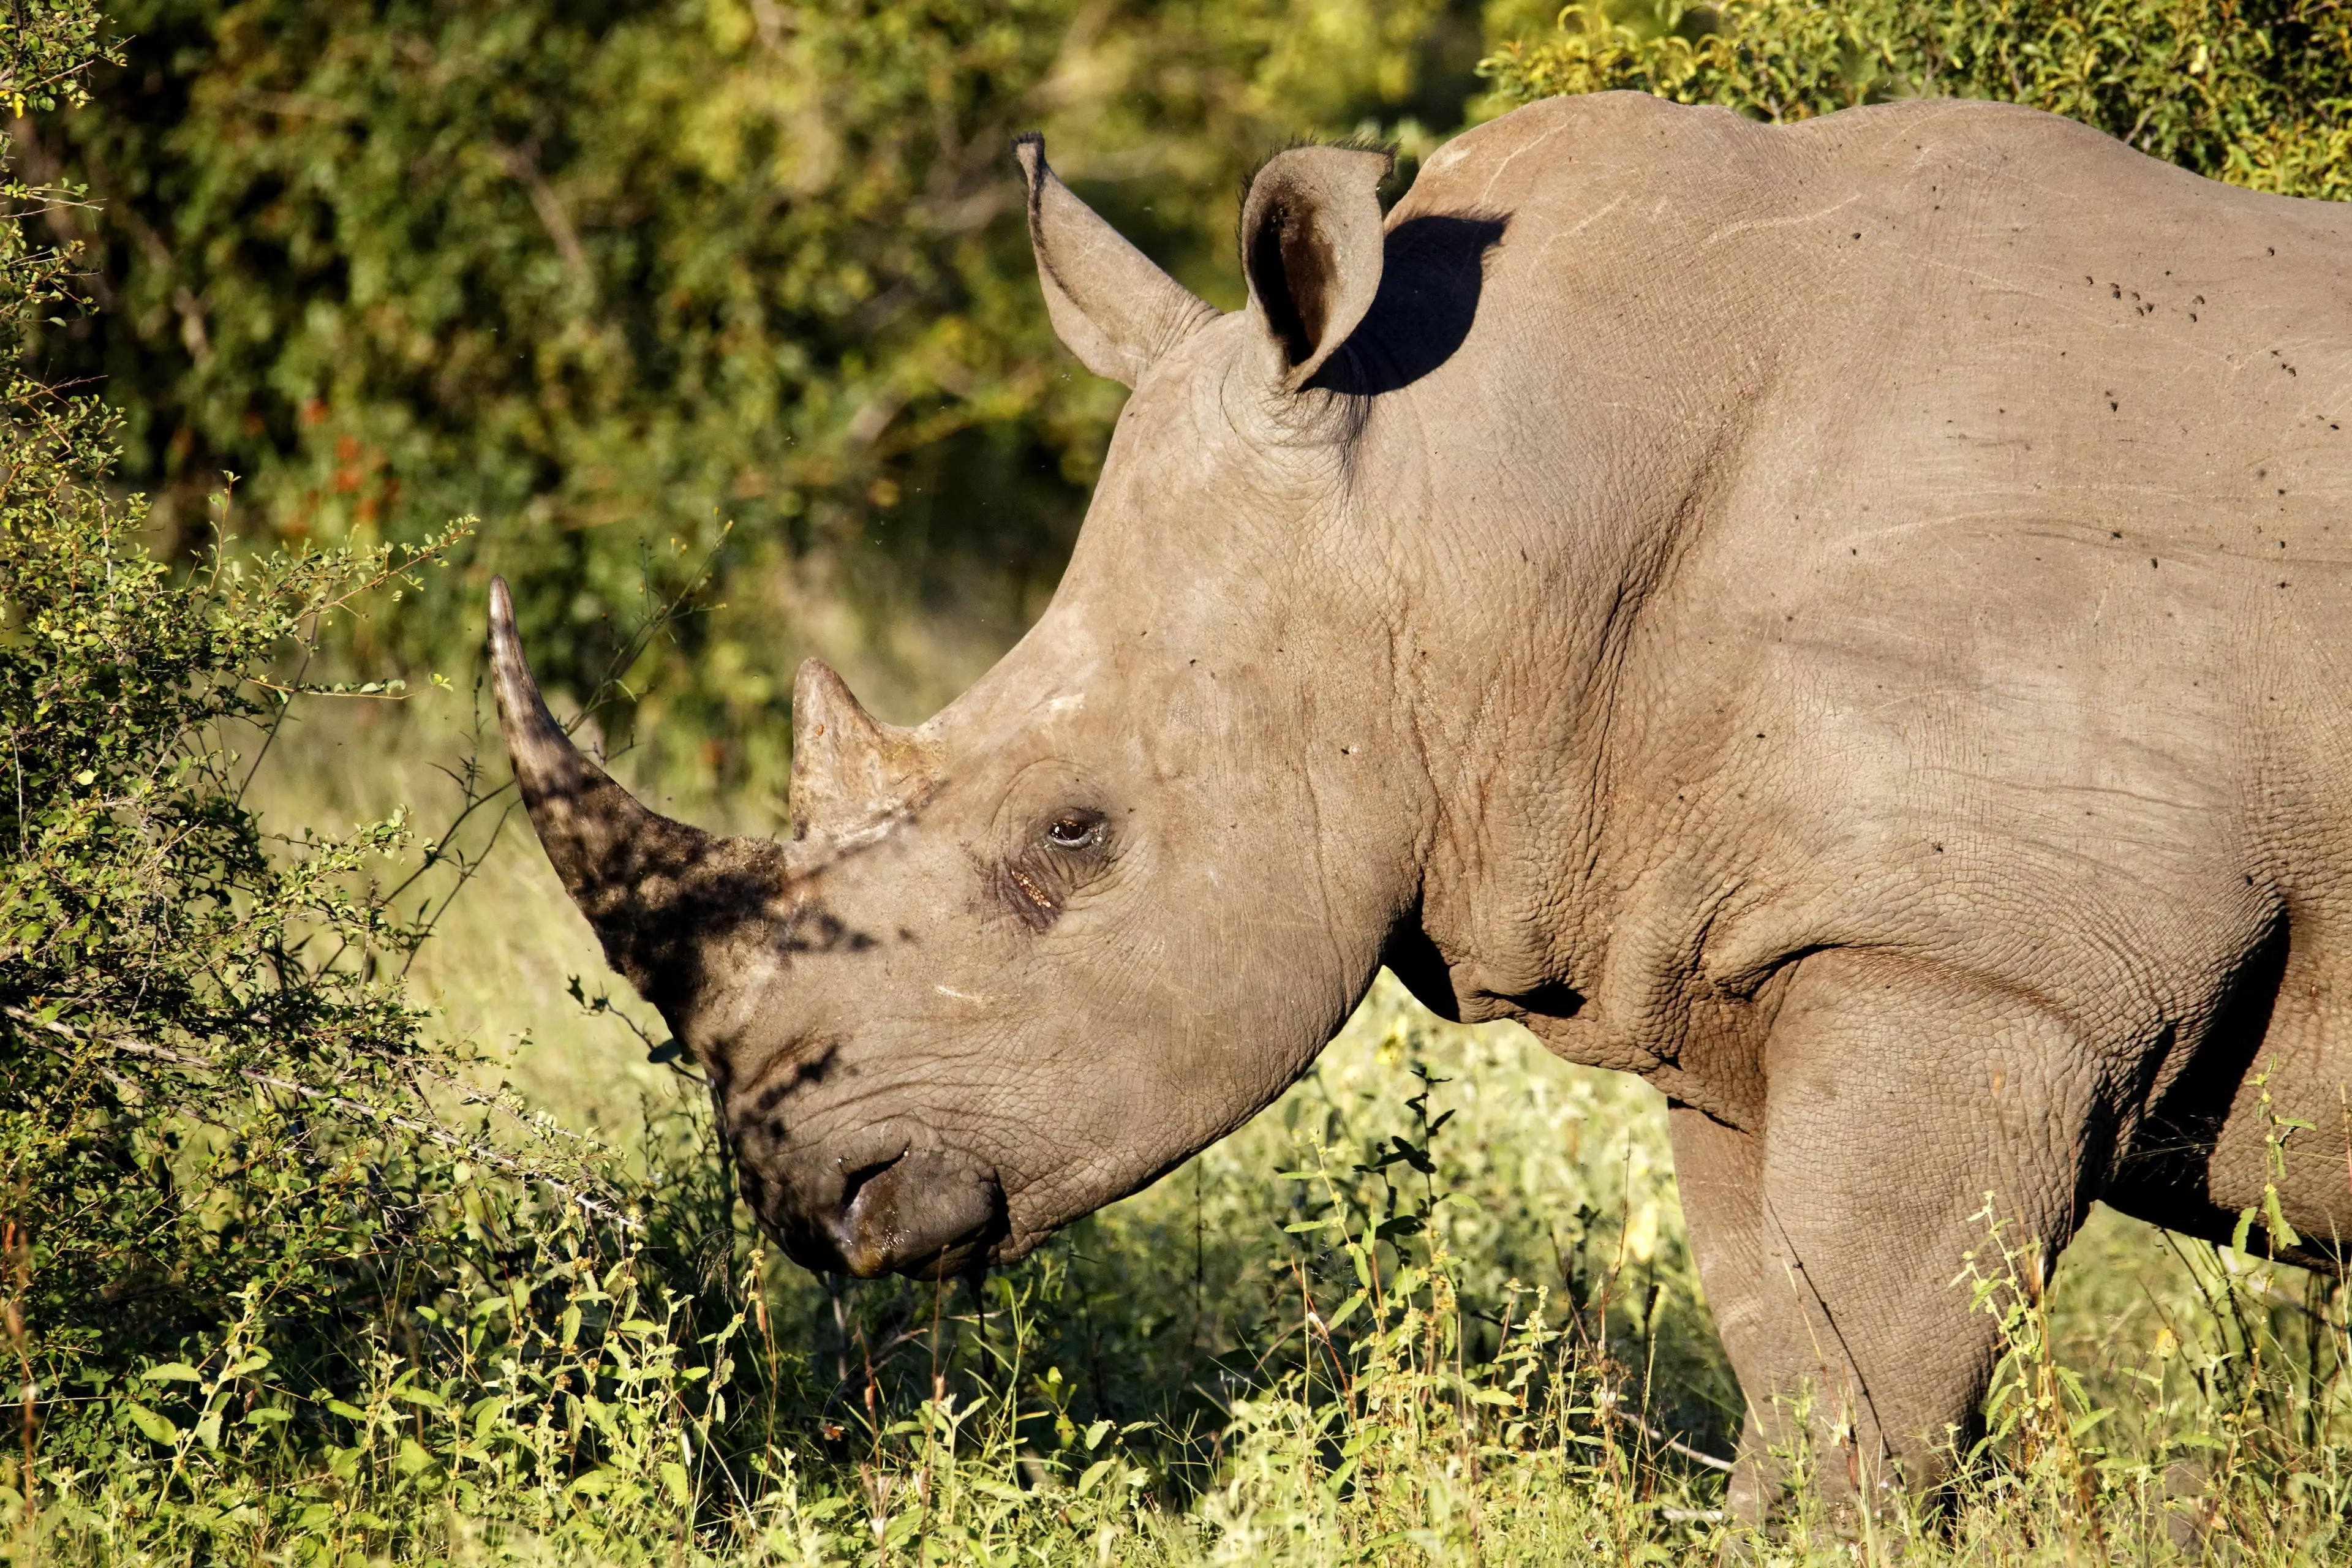 Rhino in Kruger National Park.